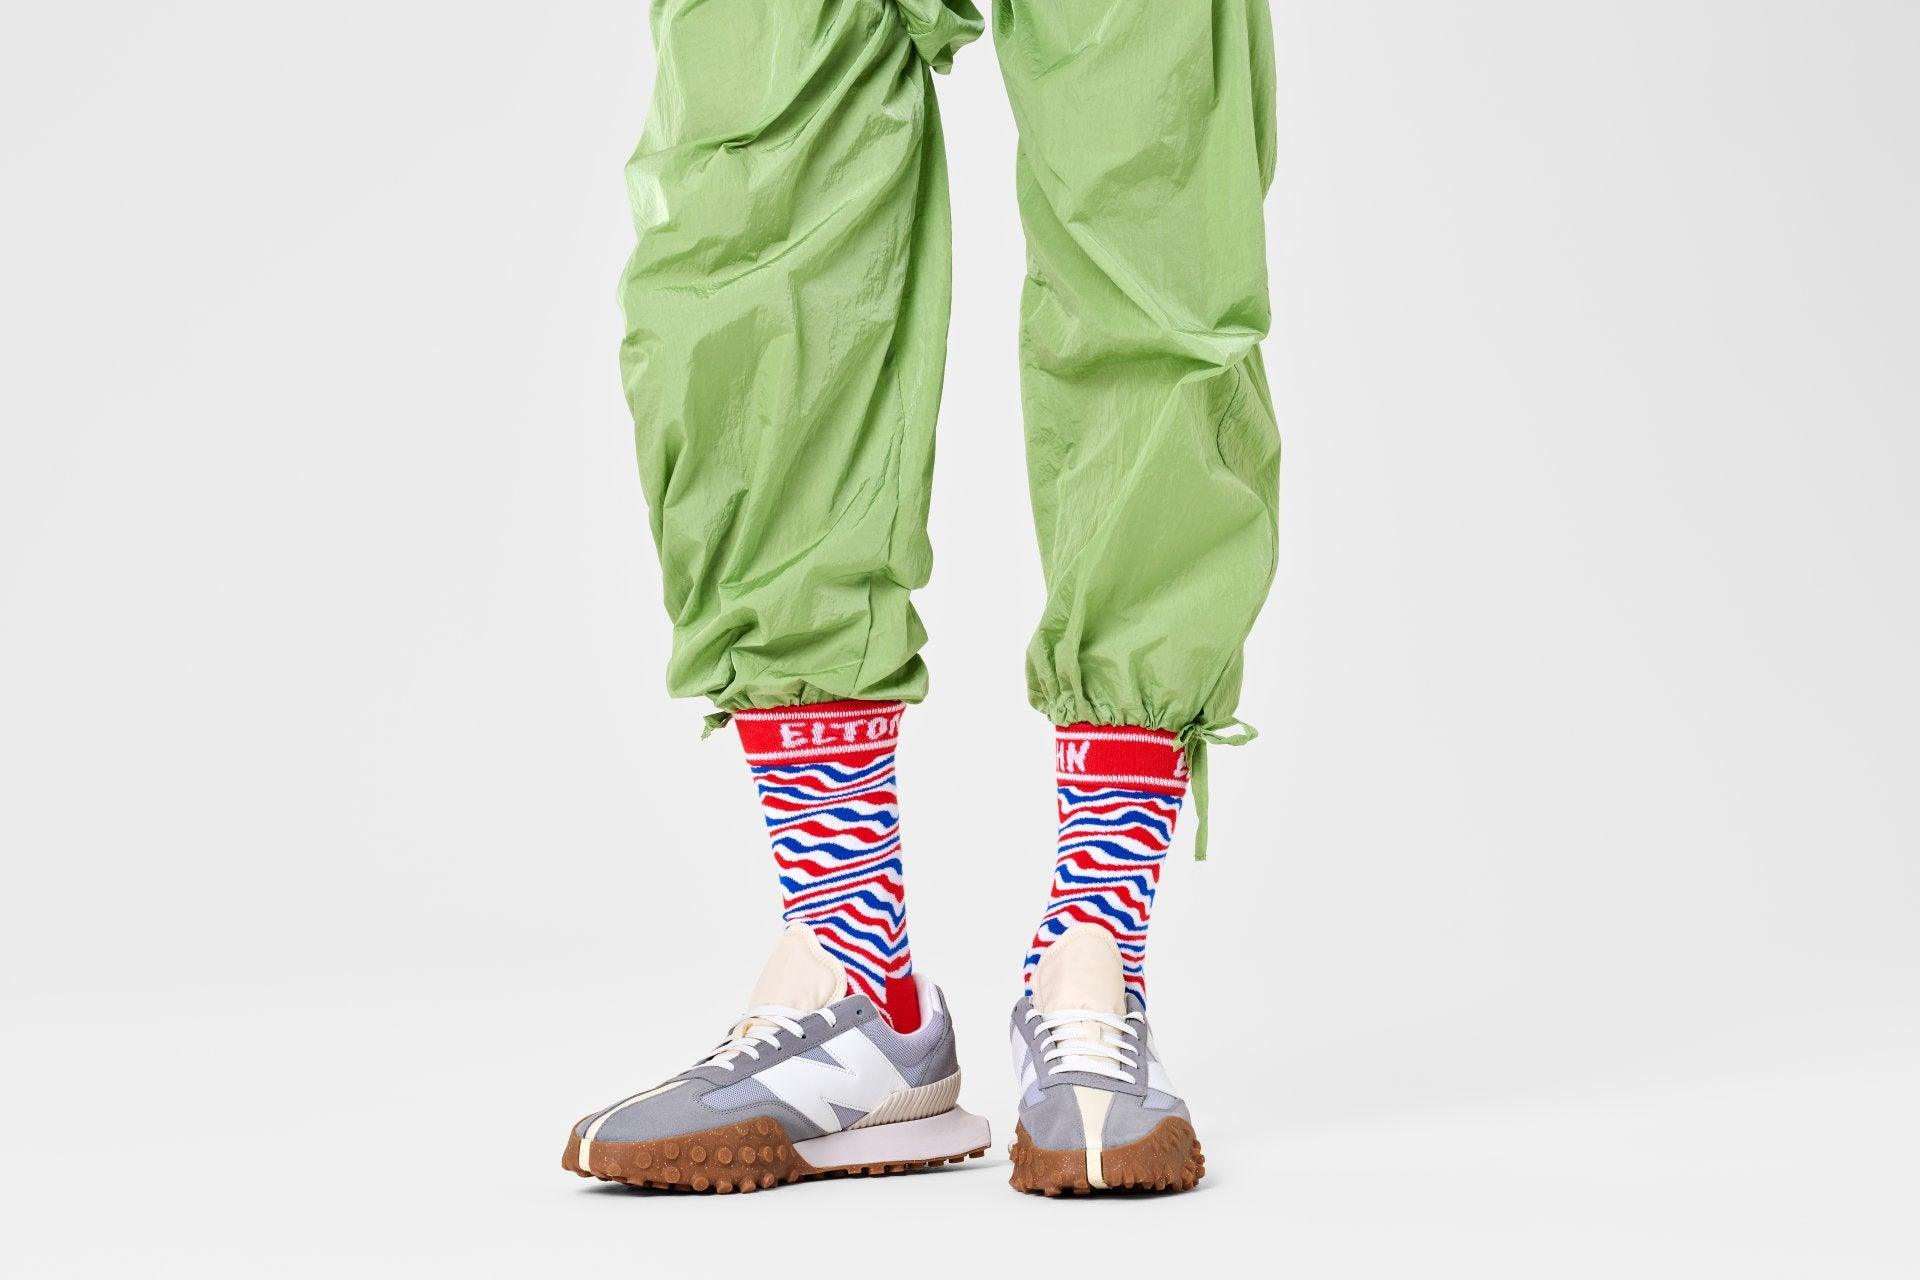 Calcetines Happy Socks x Elton John Striped - ECRU